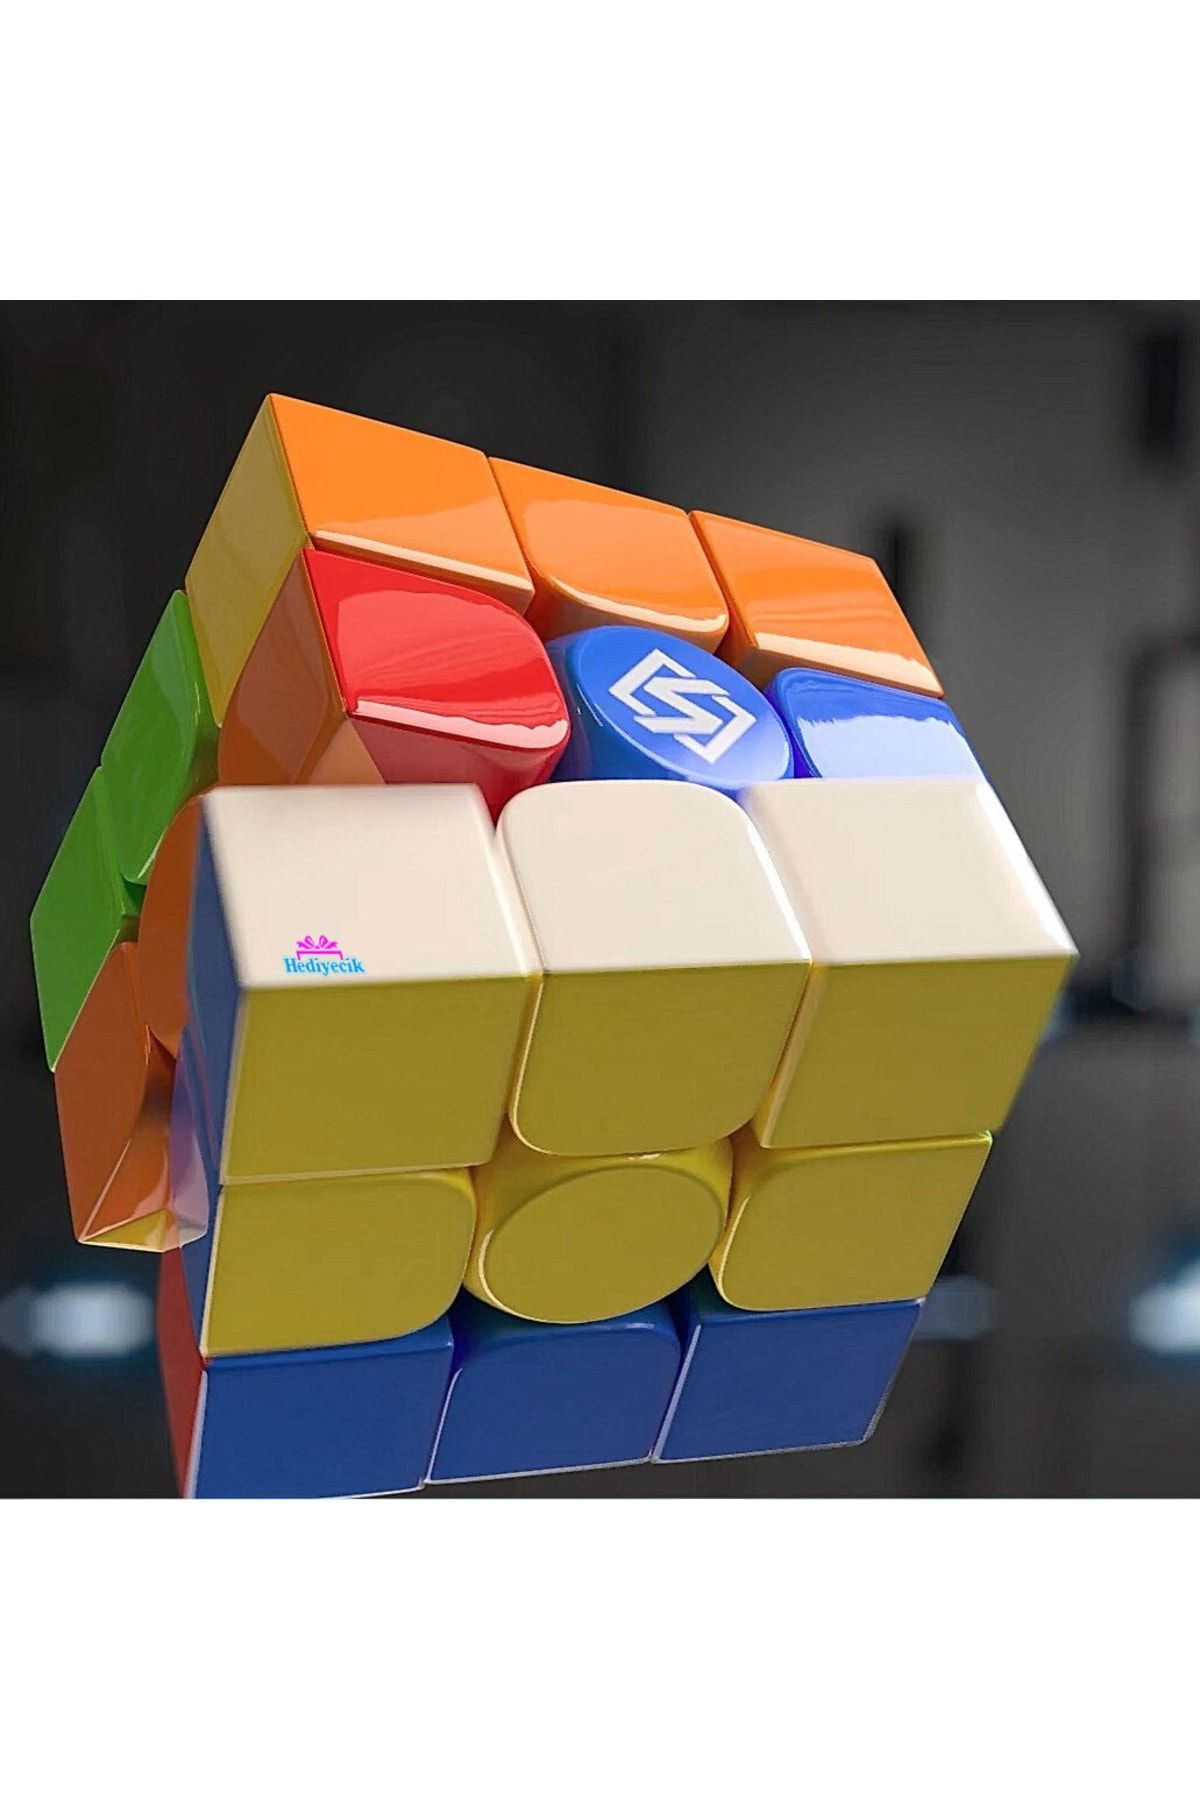 Игра следующий кубик. Next Cube. NEXCUBE игрушка. Next Cube inside. Next Cube Disassembly.